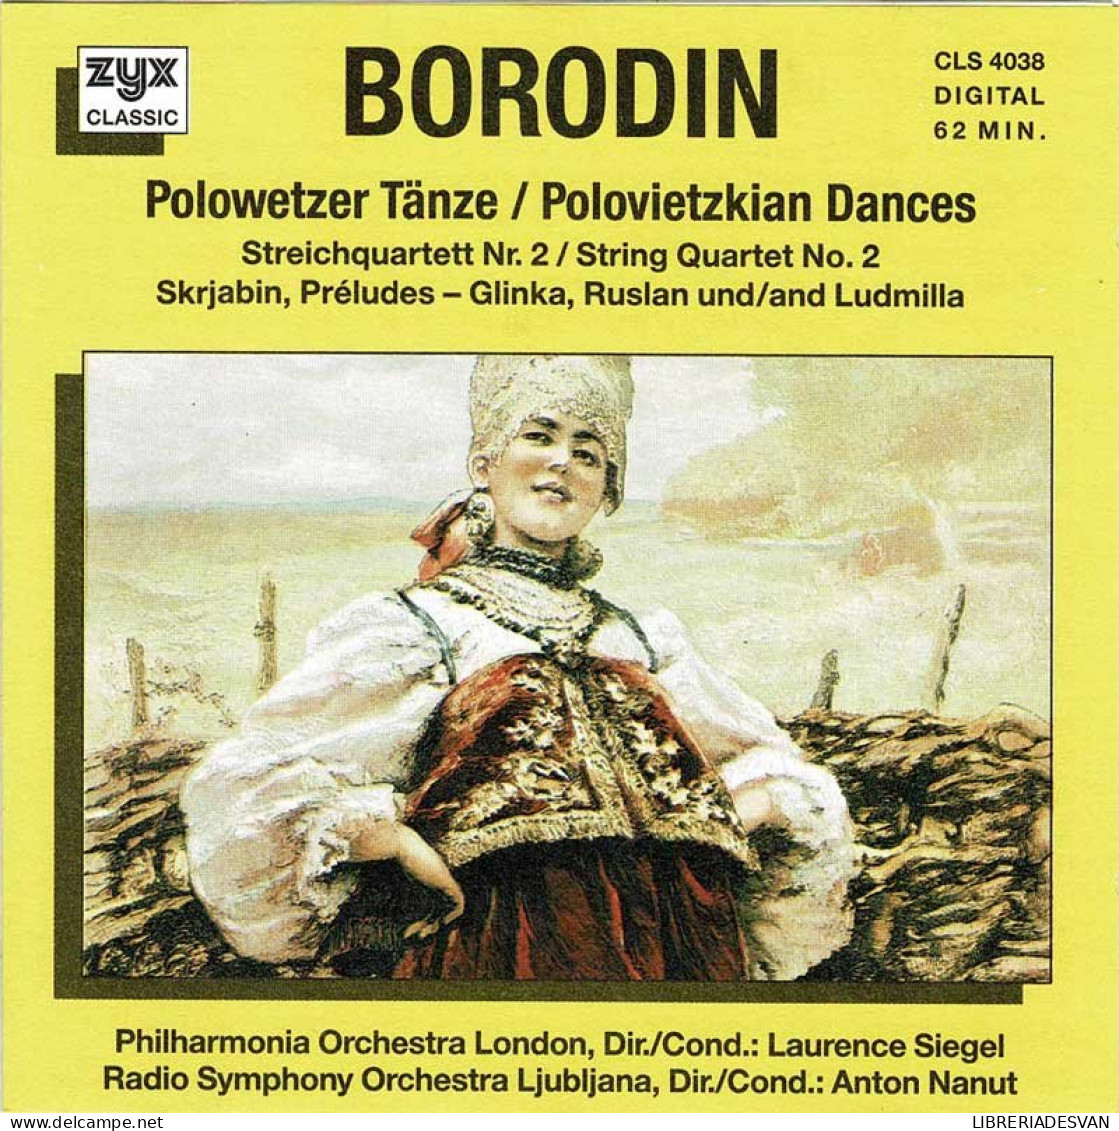 Borodin - Polovietzkian Dances. CD - Classique